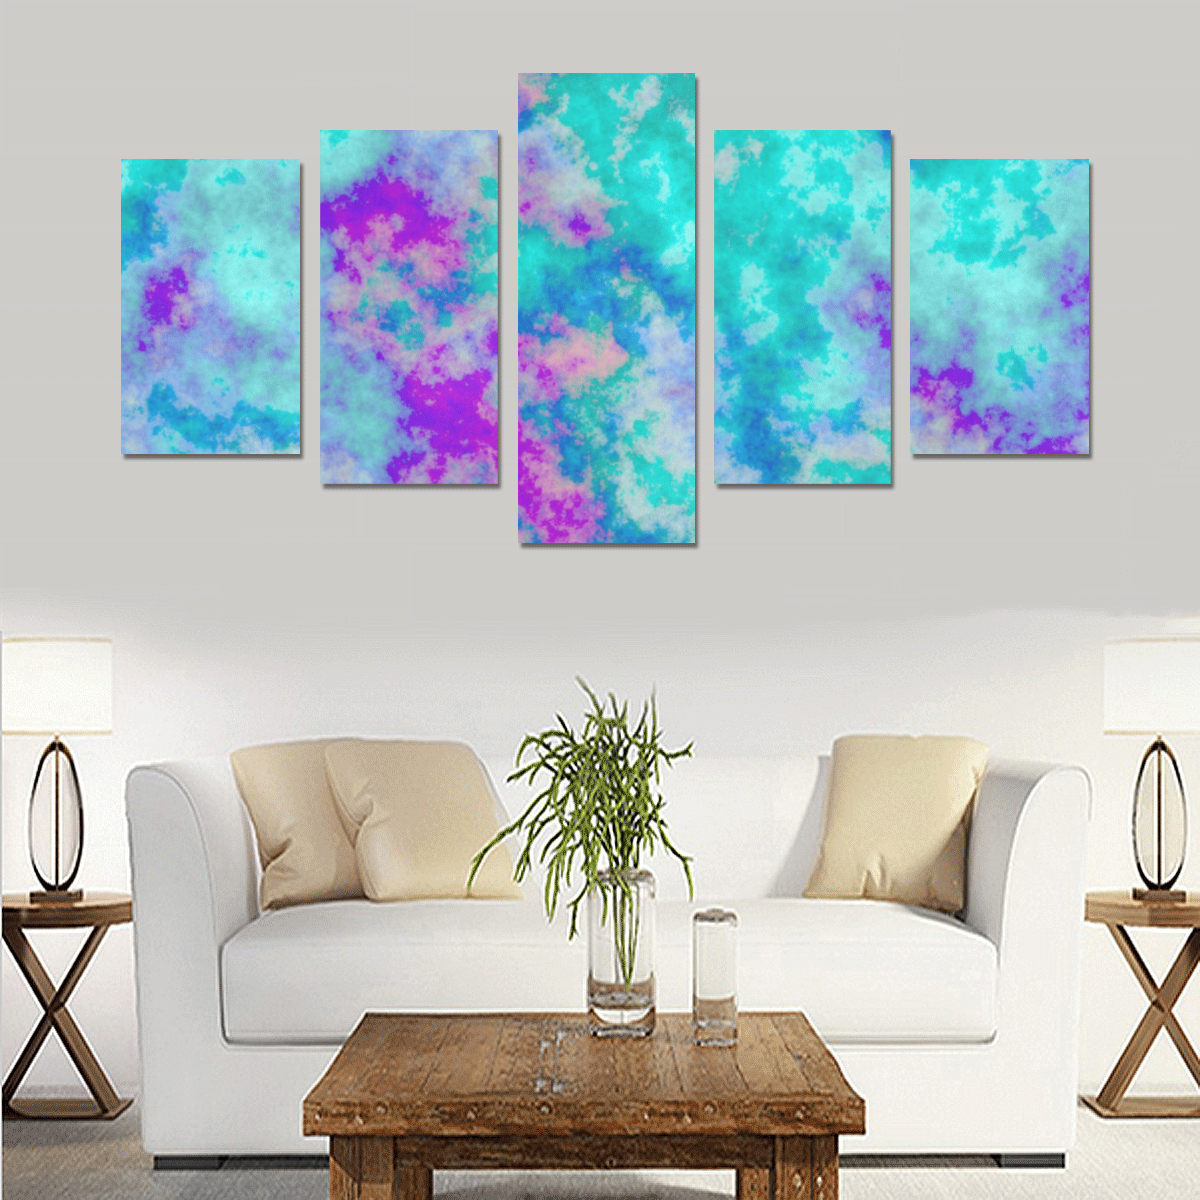 Turquoise and purple cloud art Canvas Print Sets C (No Frame)